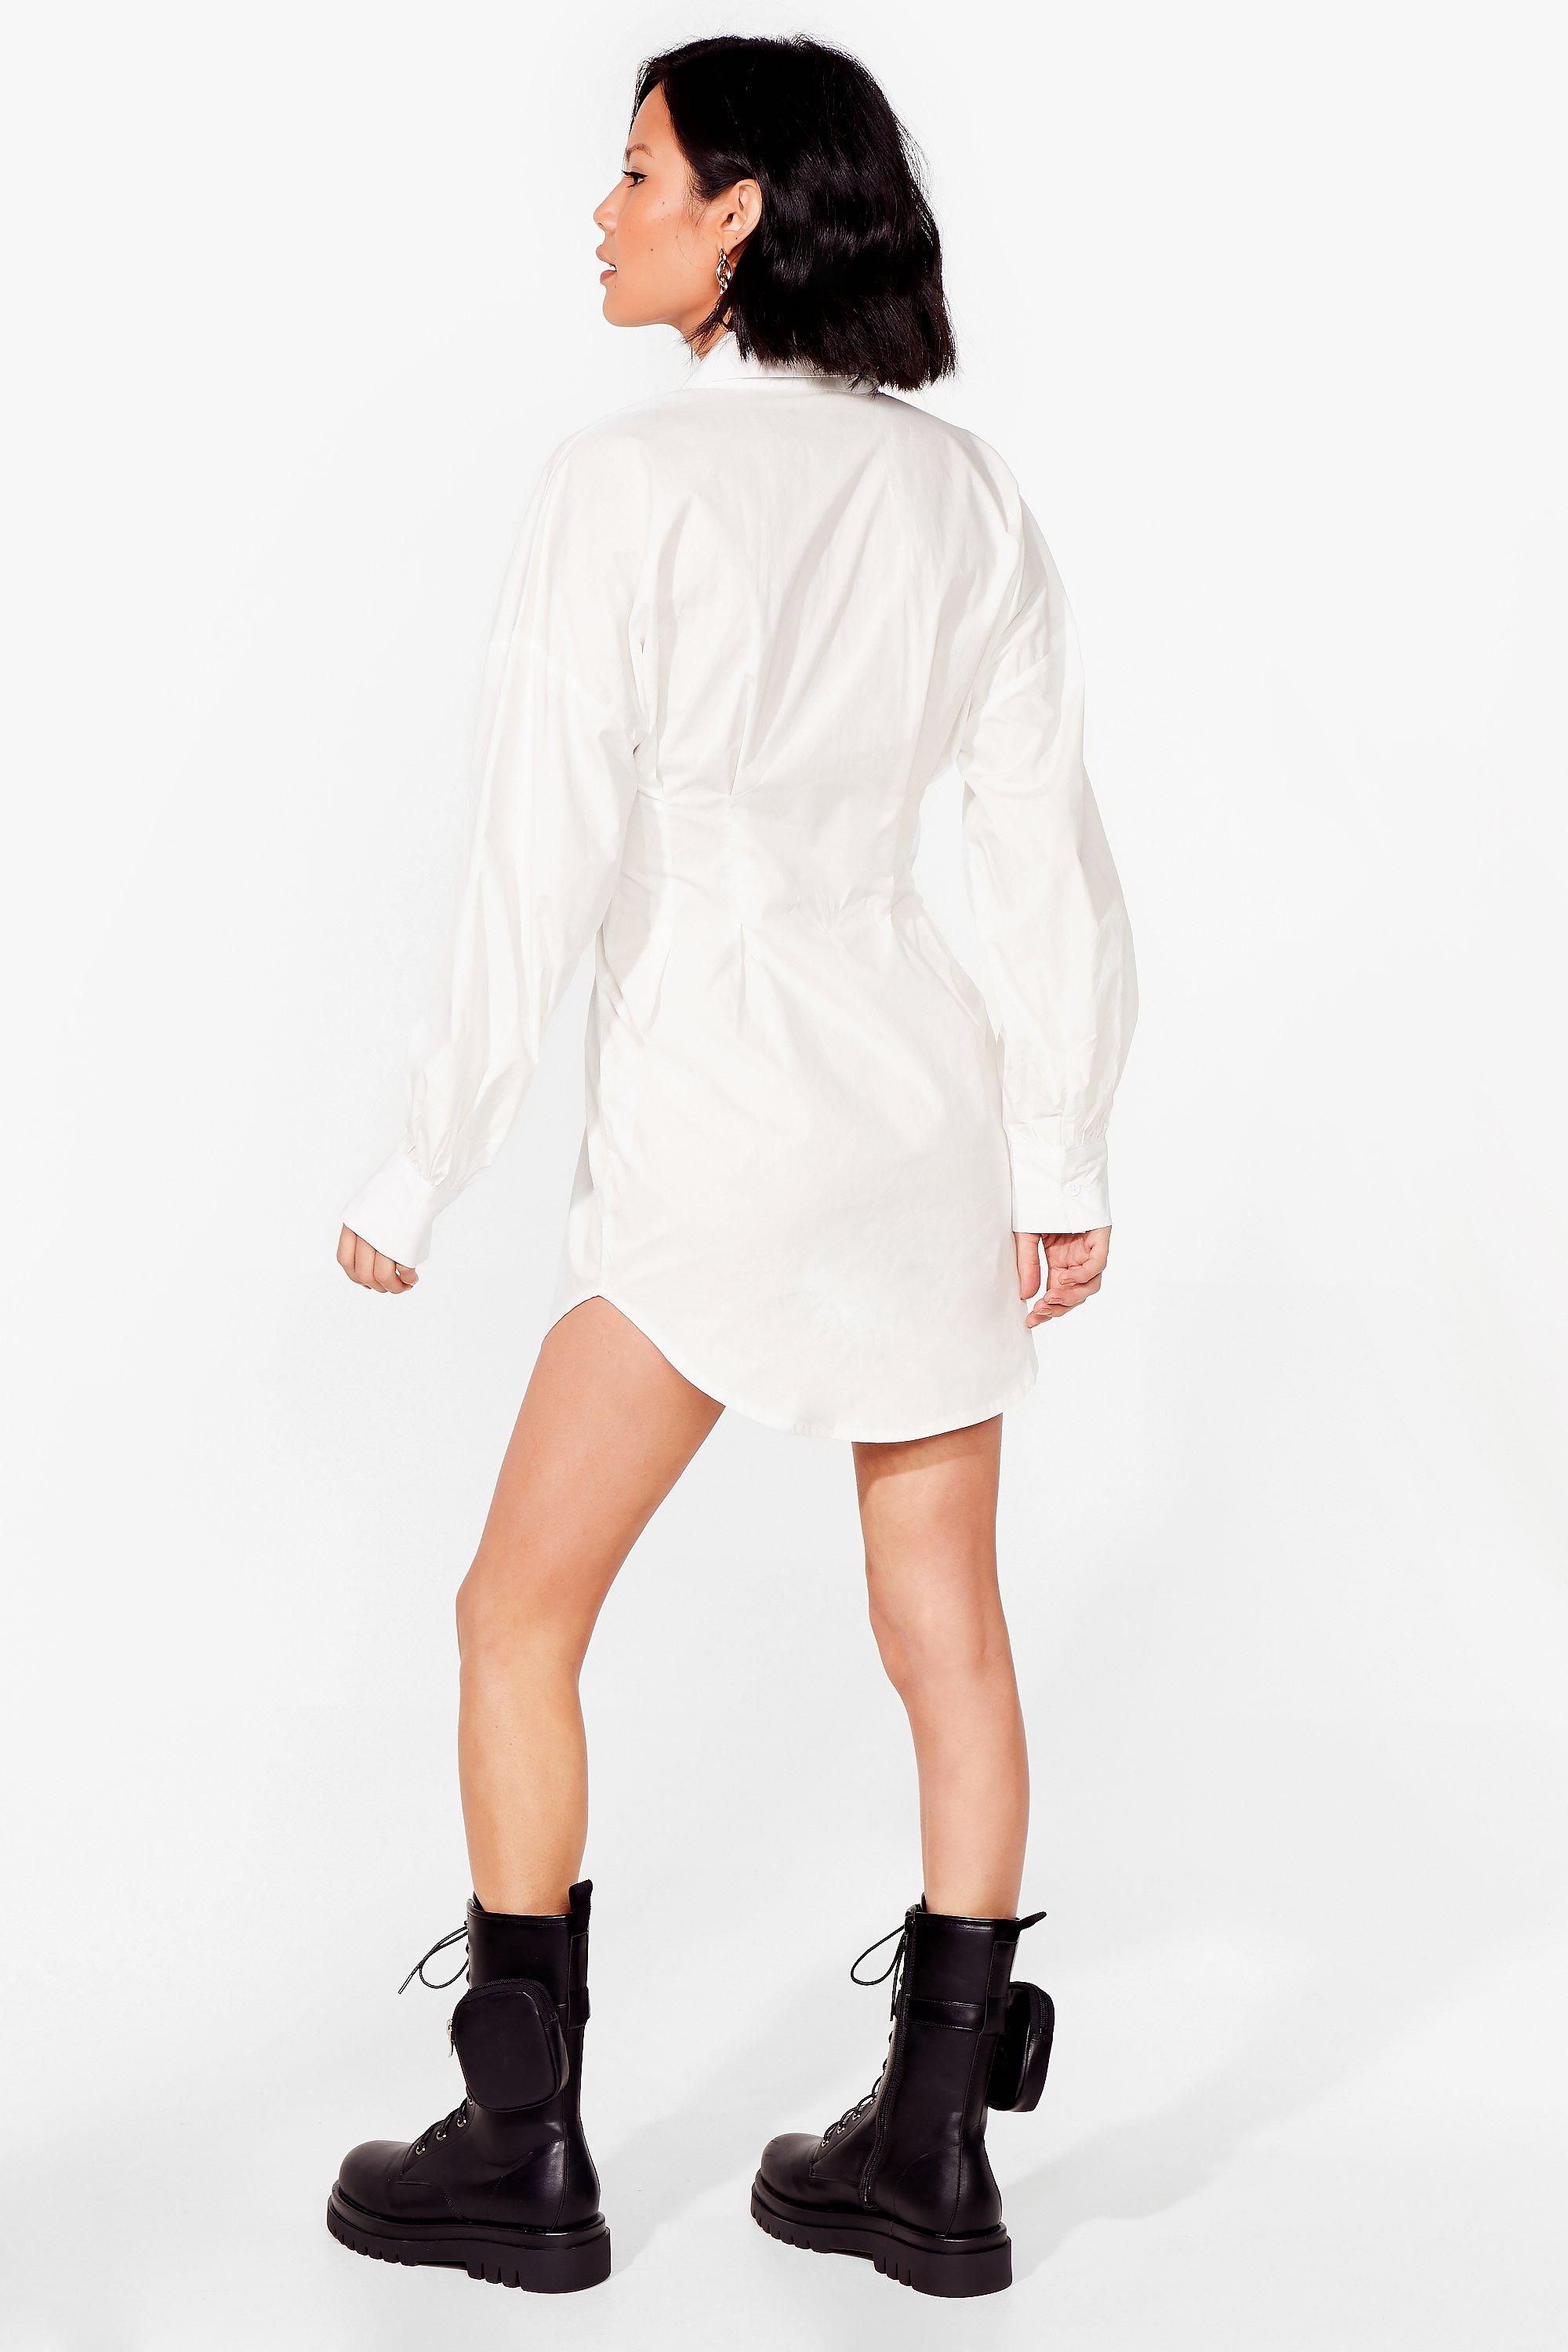 Claudette Mini Dress - Long Sleeve Corset Shirt Dress in White